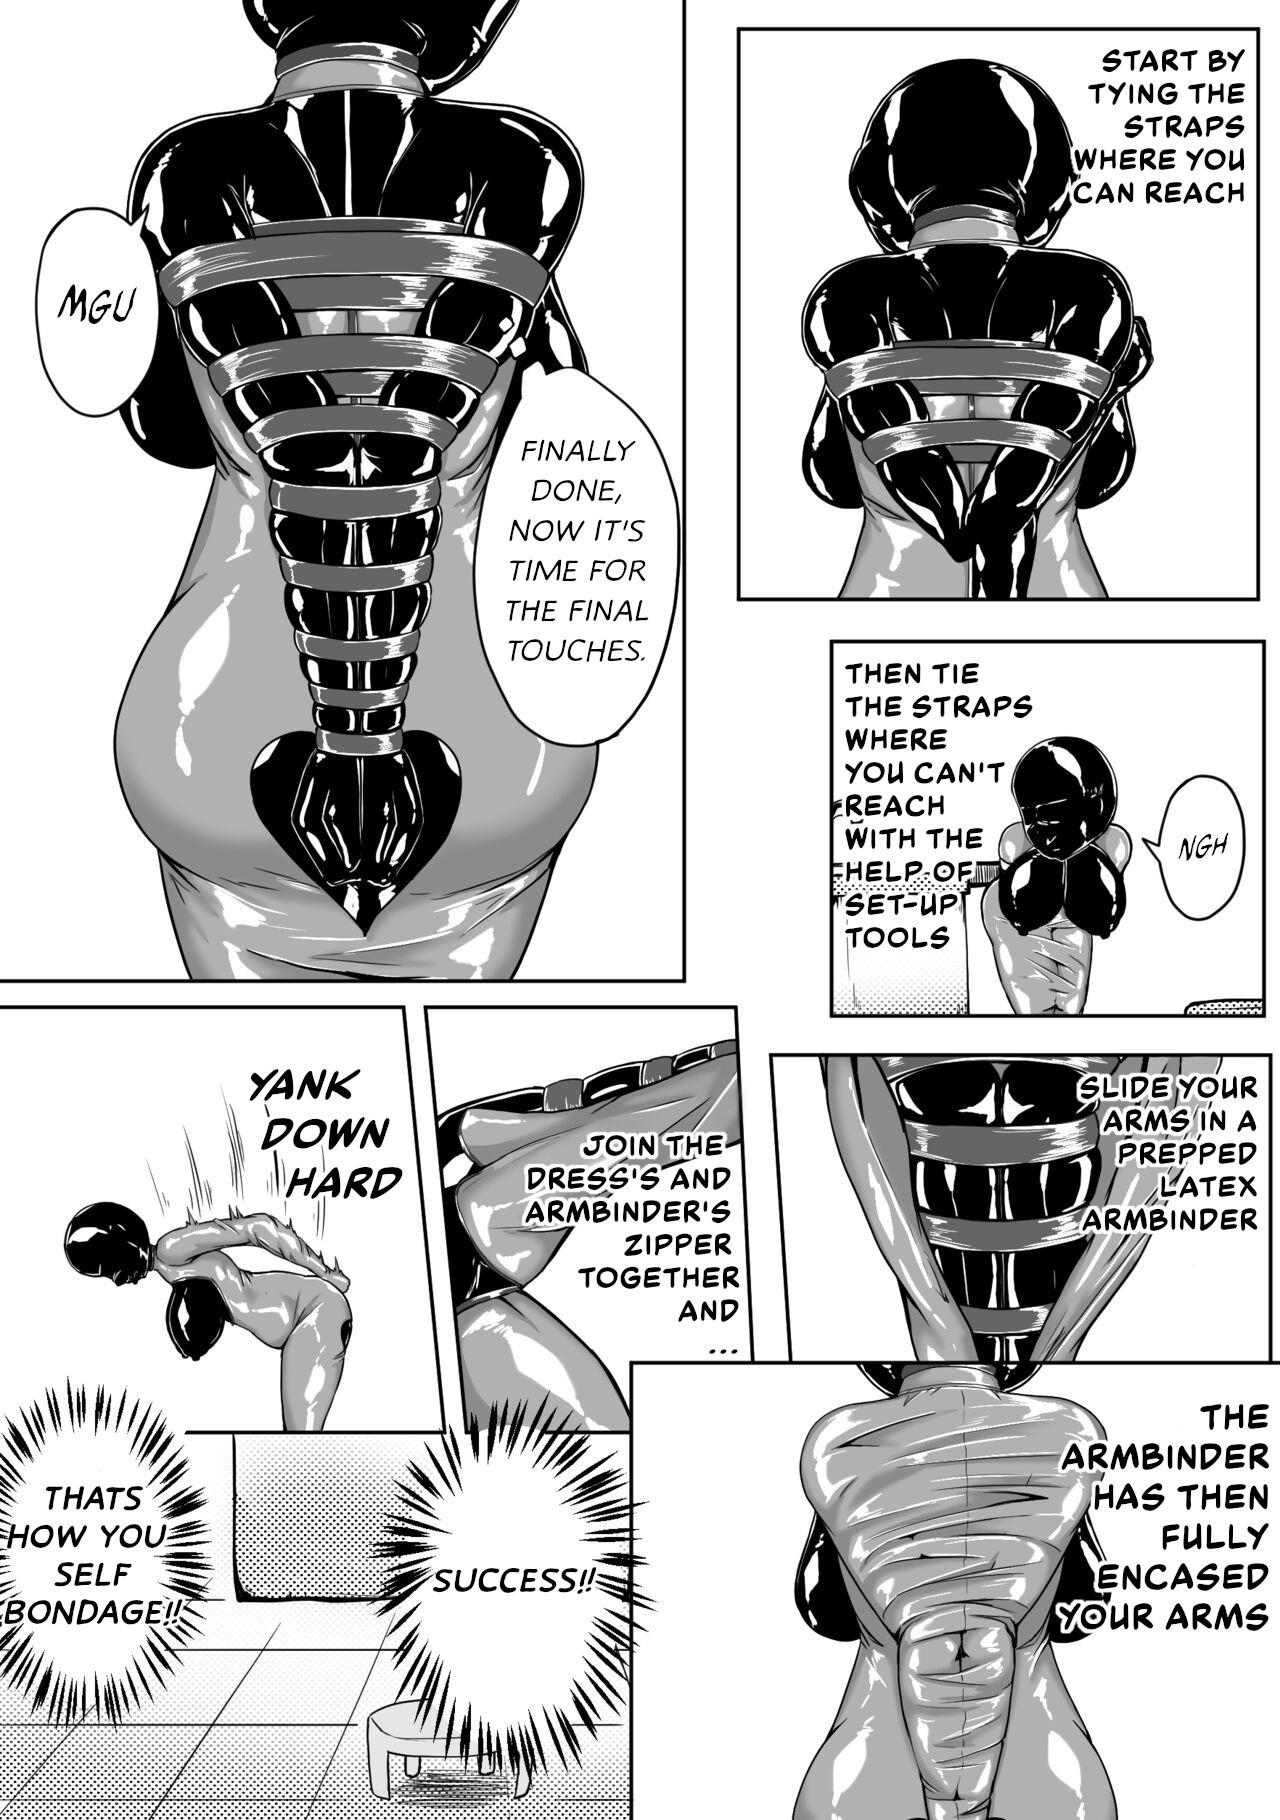 Self Bondage Cartoon Drawings - Self Bondage pt. 1 - Page 11 - HentaiEra